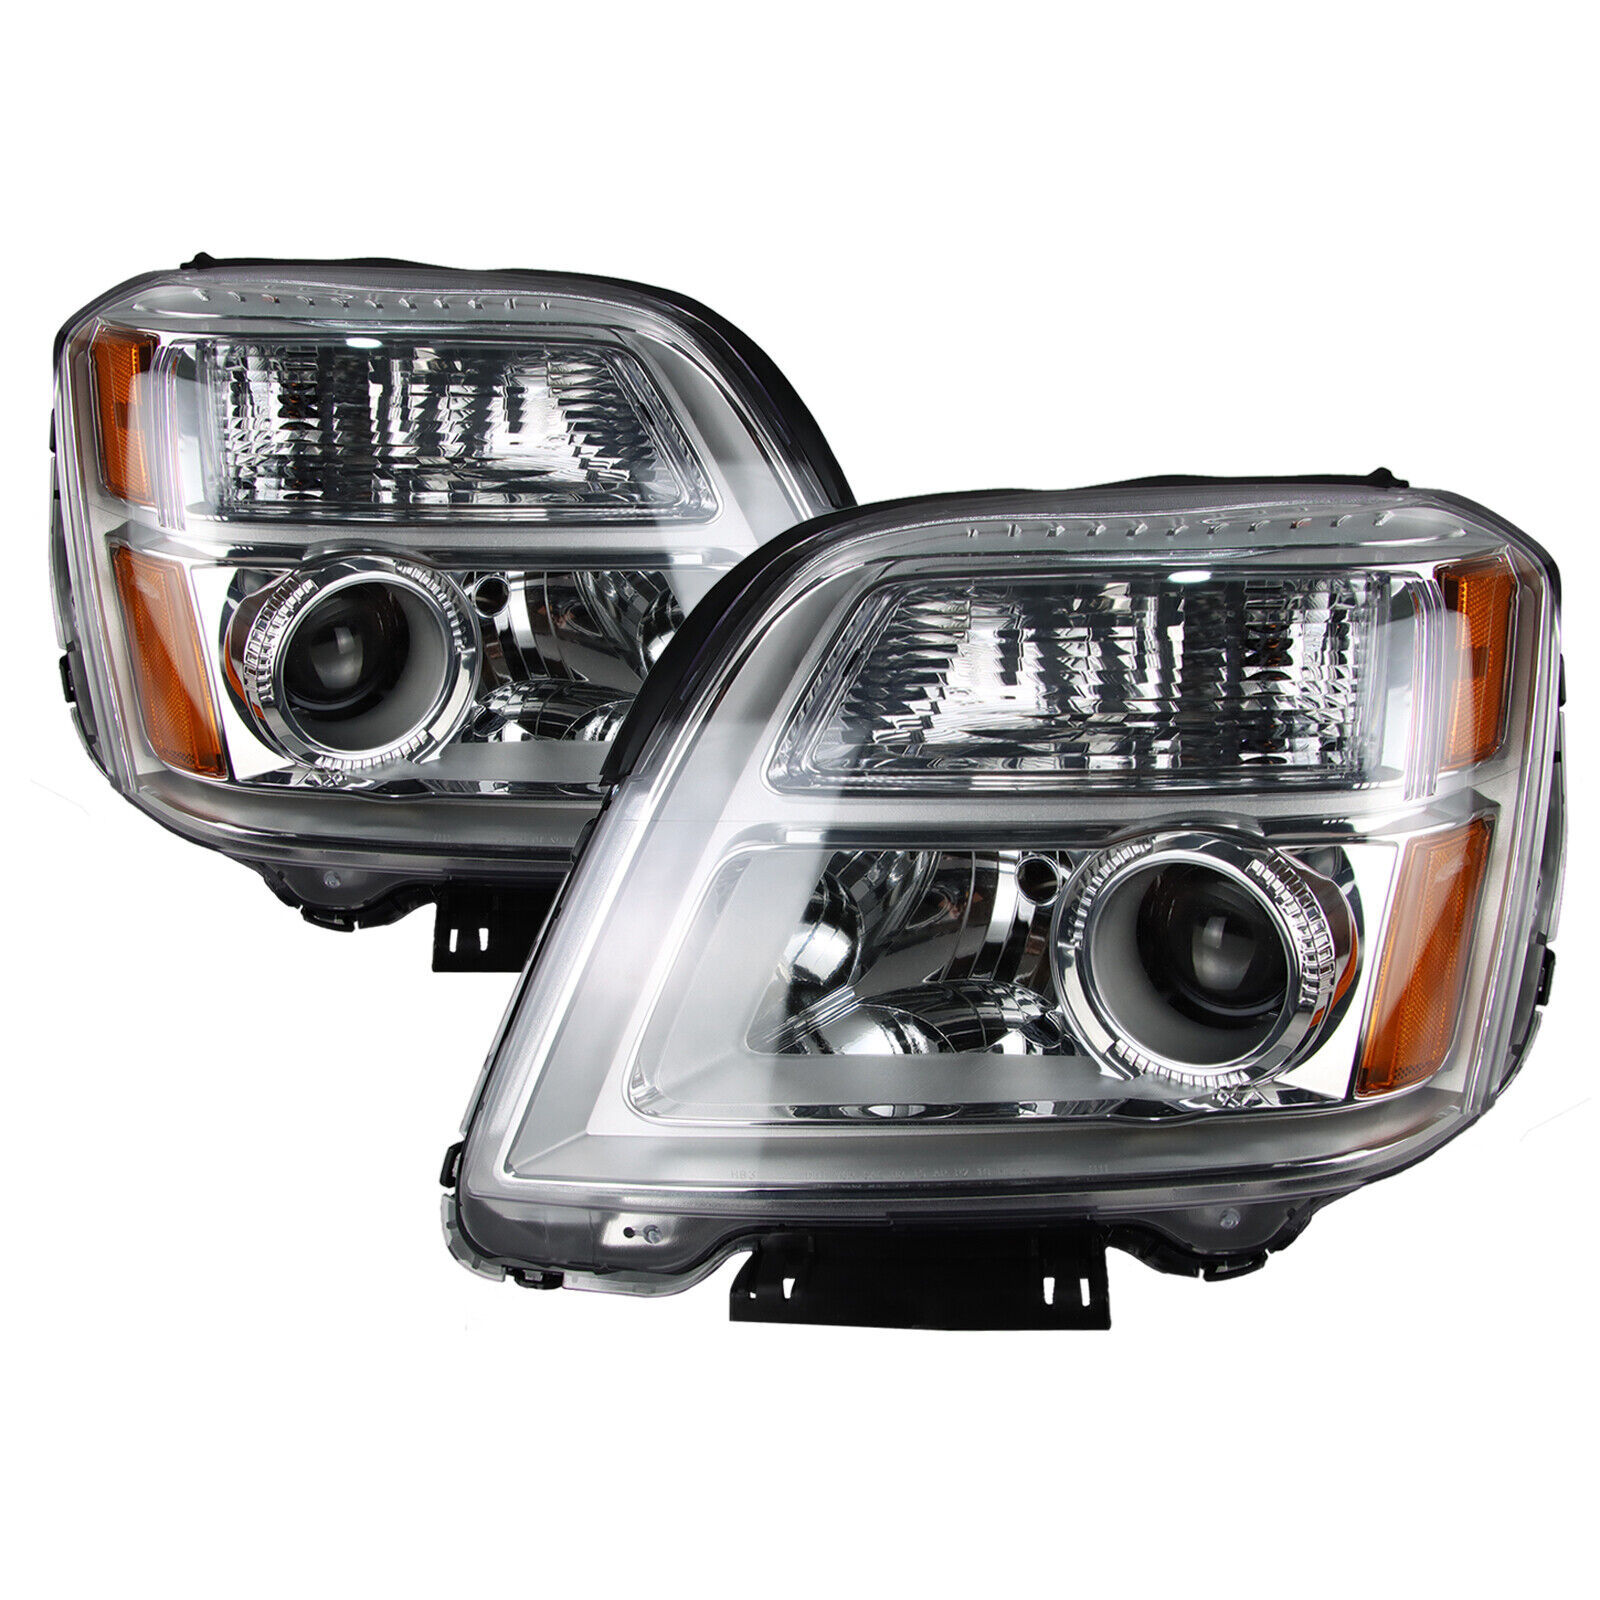 Headlight Assembly for 2010-2015 GMC Terrain,Clear Lens, 1 Pair Headlamps